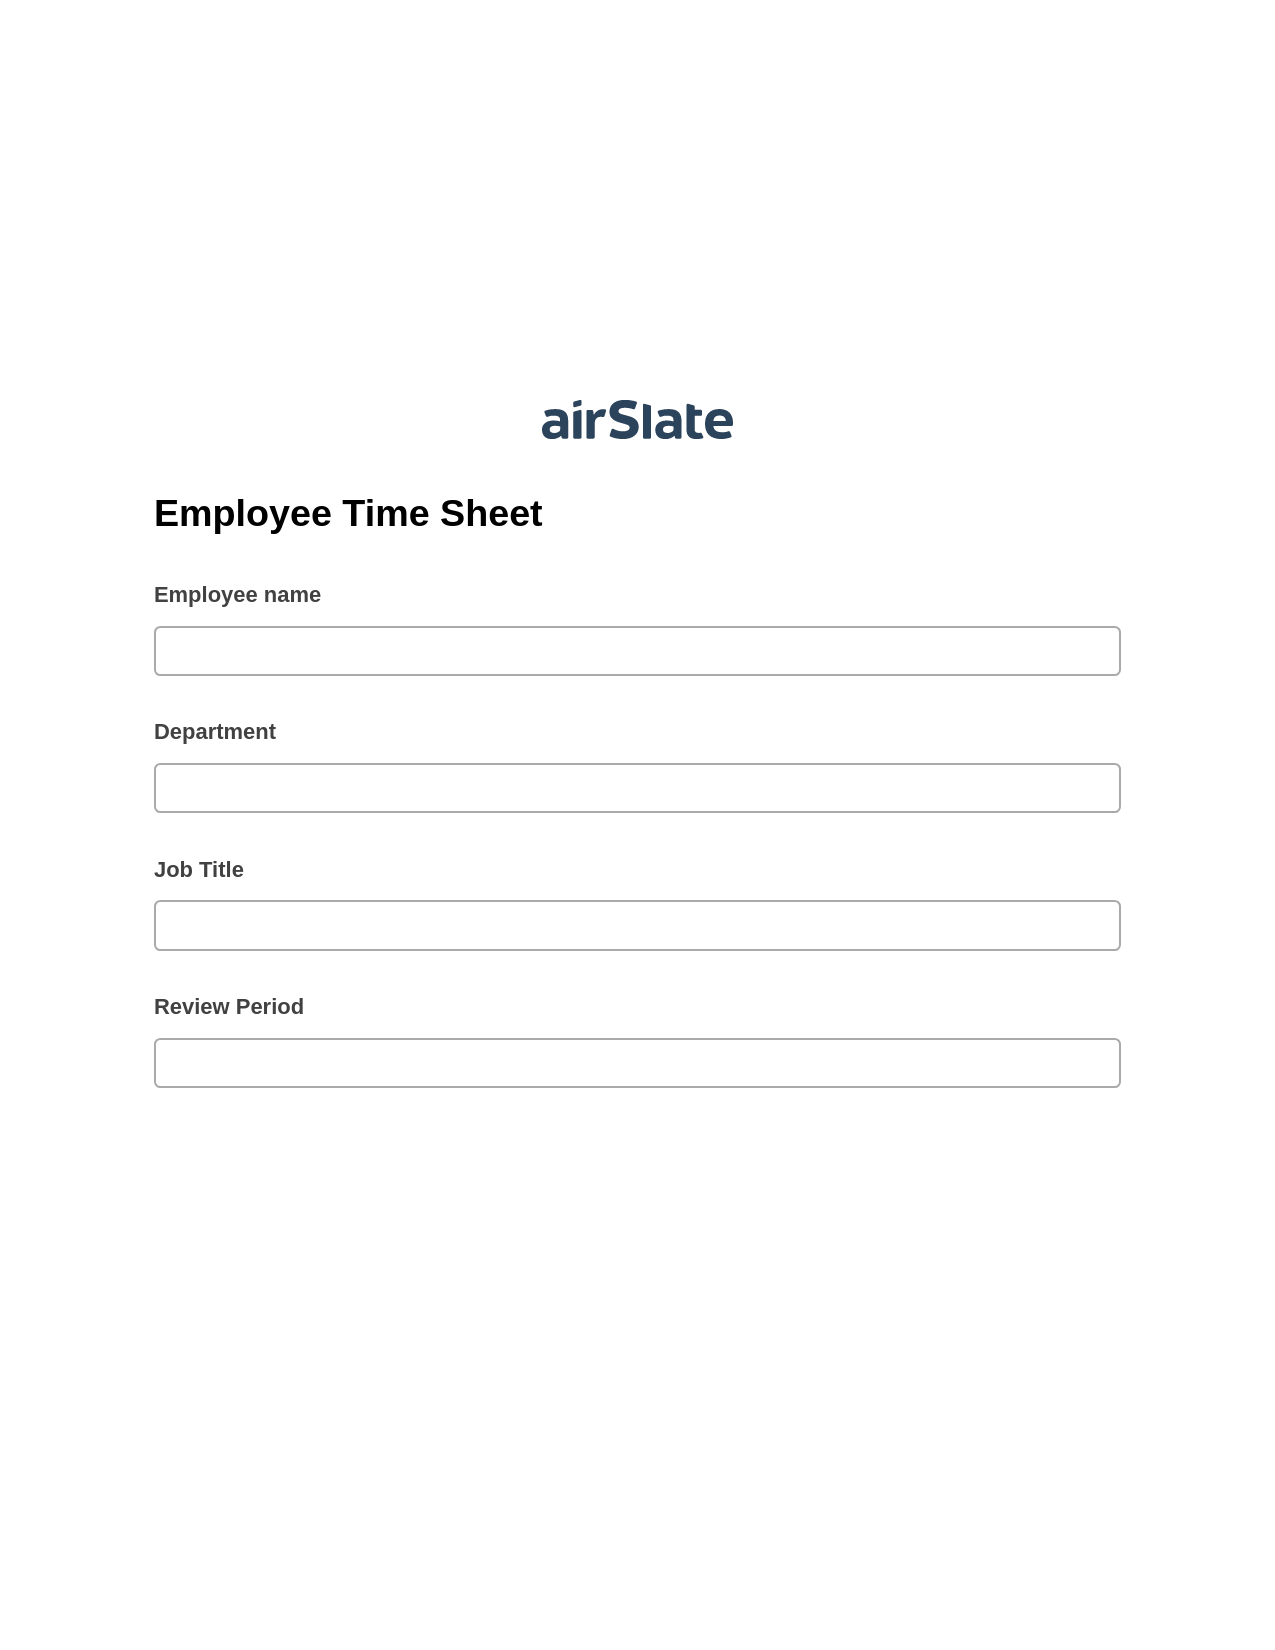 Employee Time Sheet Pre-fill Dropdowns from Google Sheet Bot, Lock the Slate Bot, Export to Smartsheet